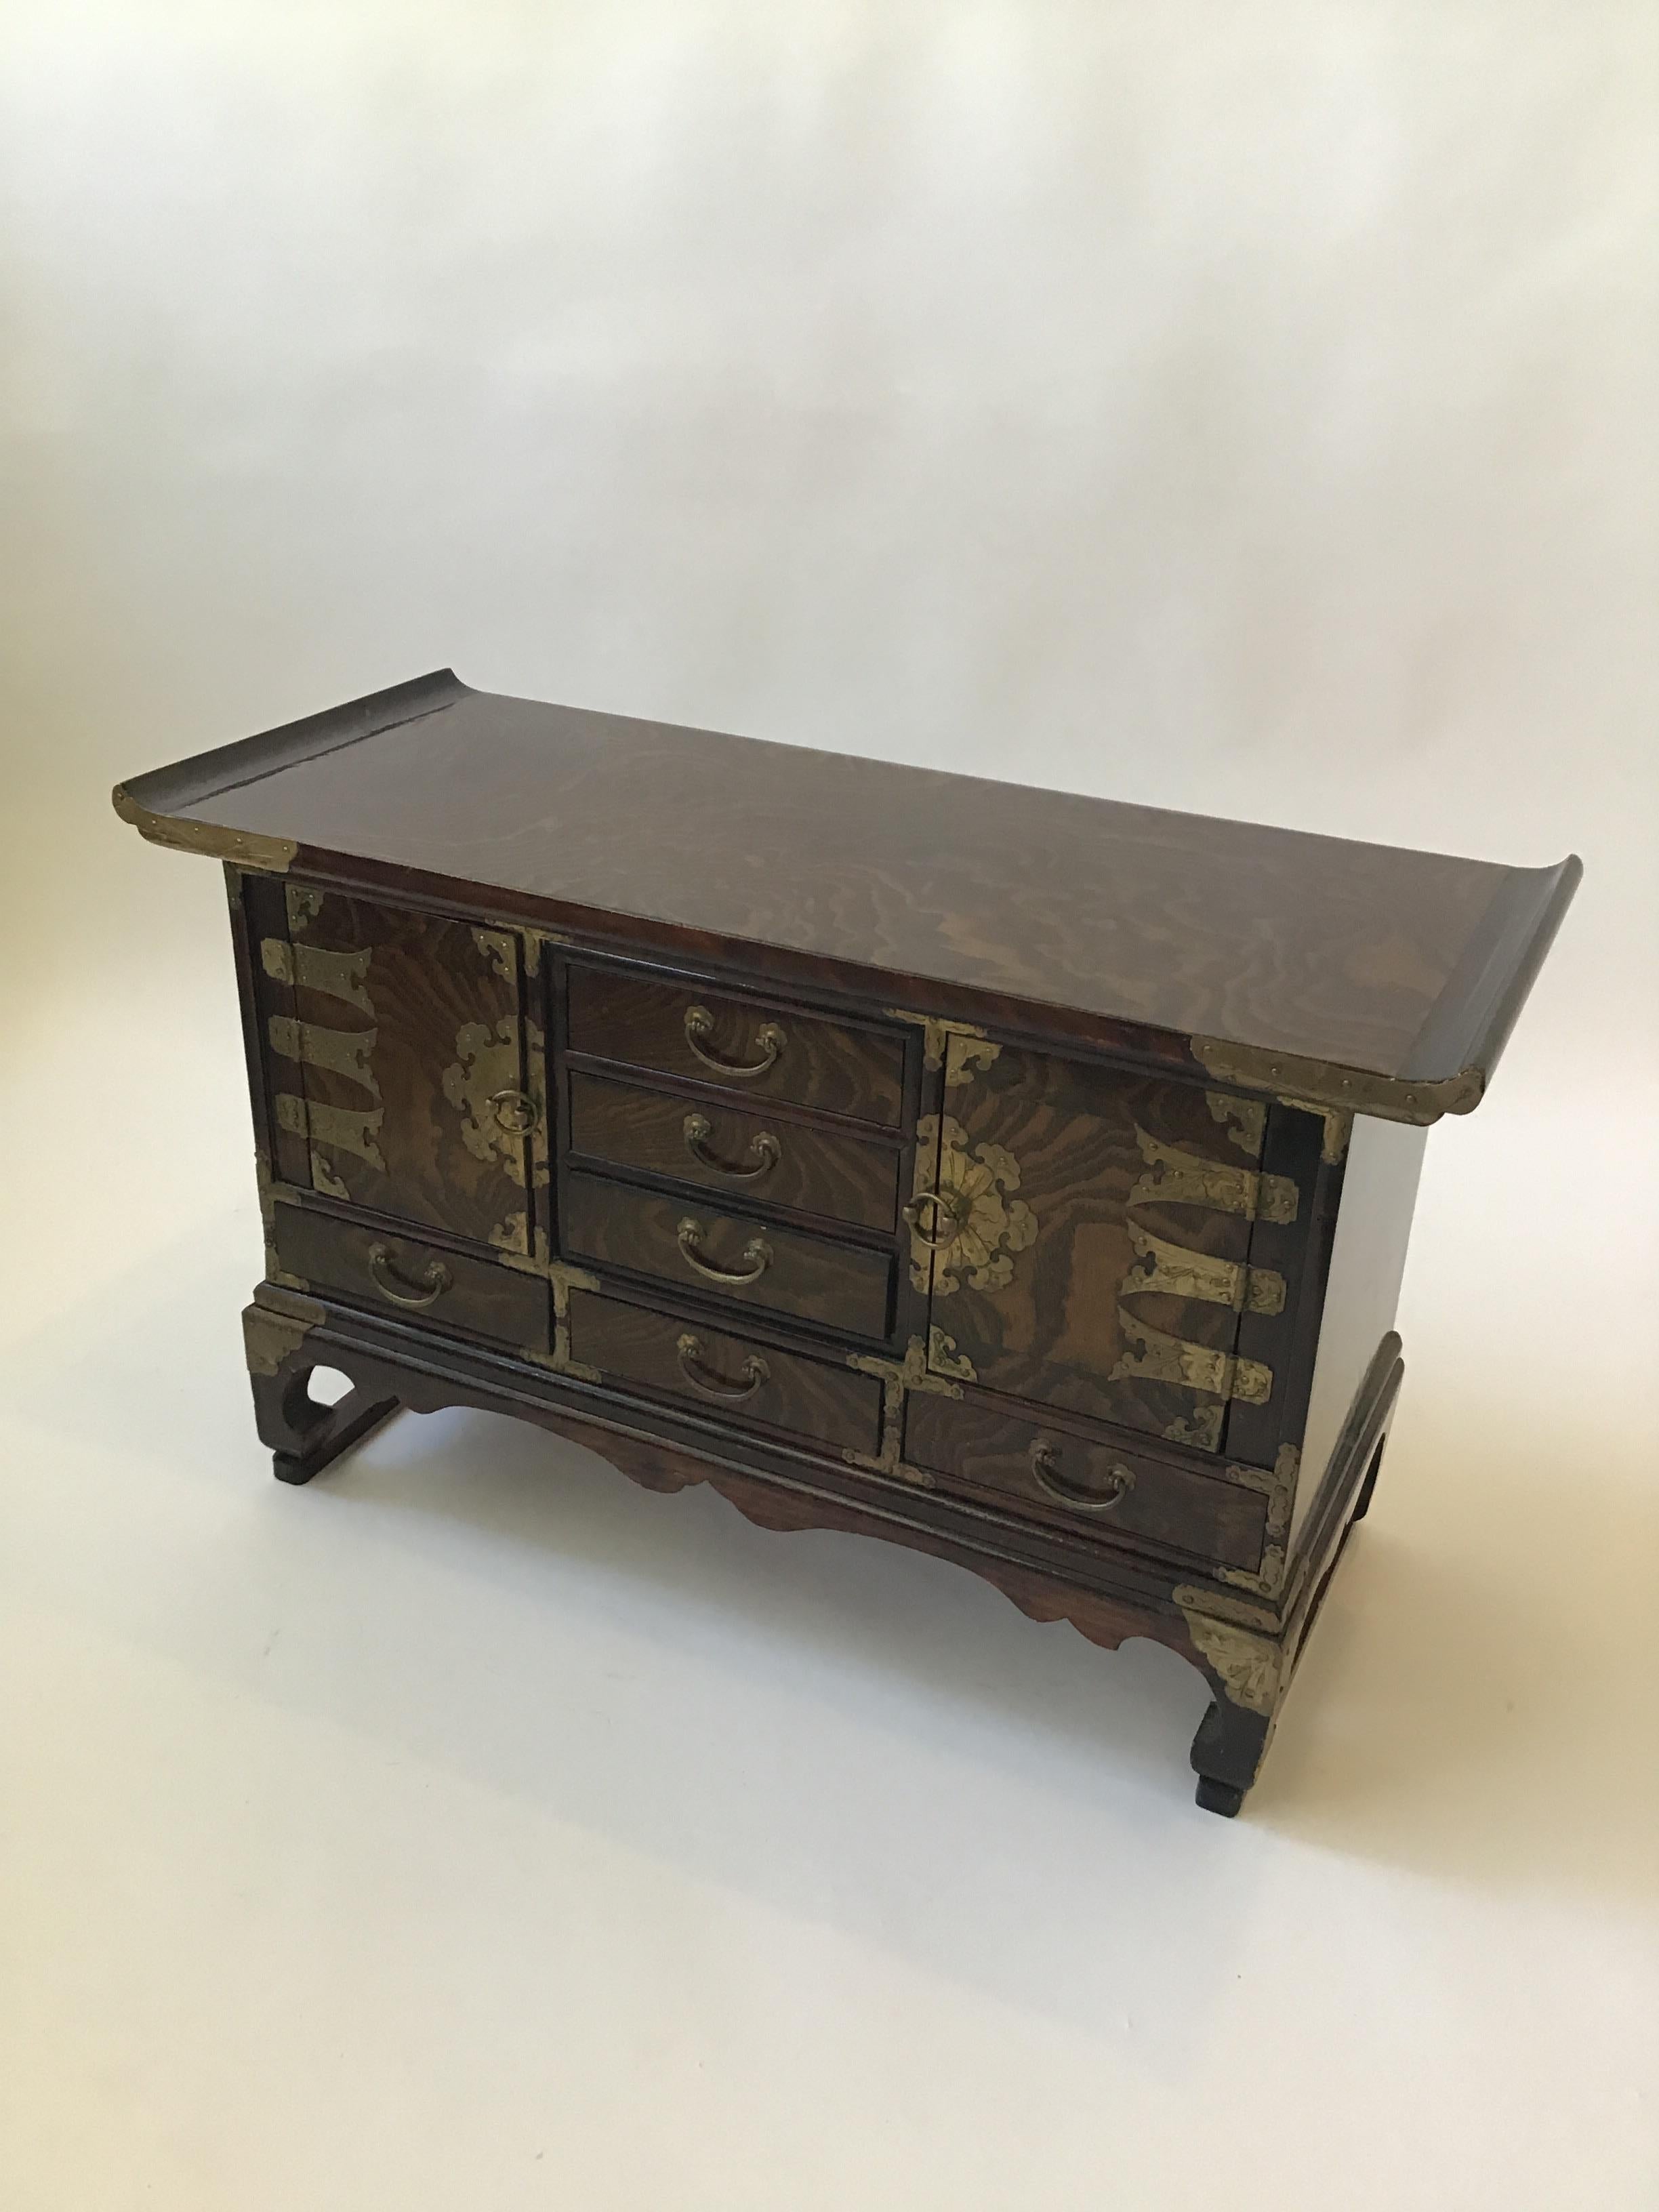 1960s Korean chest or side table. Brass ornamentation.